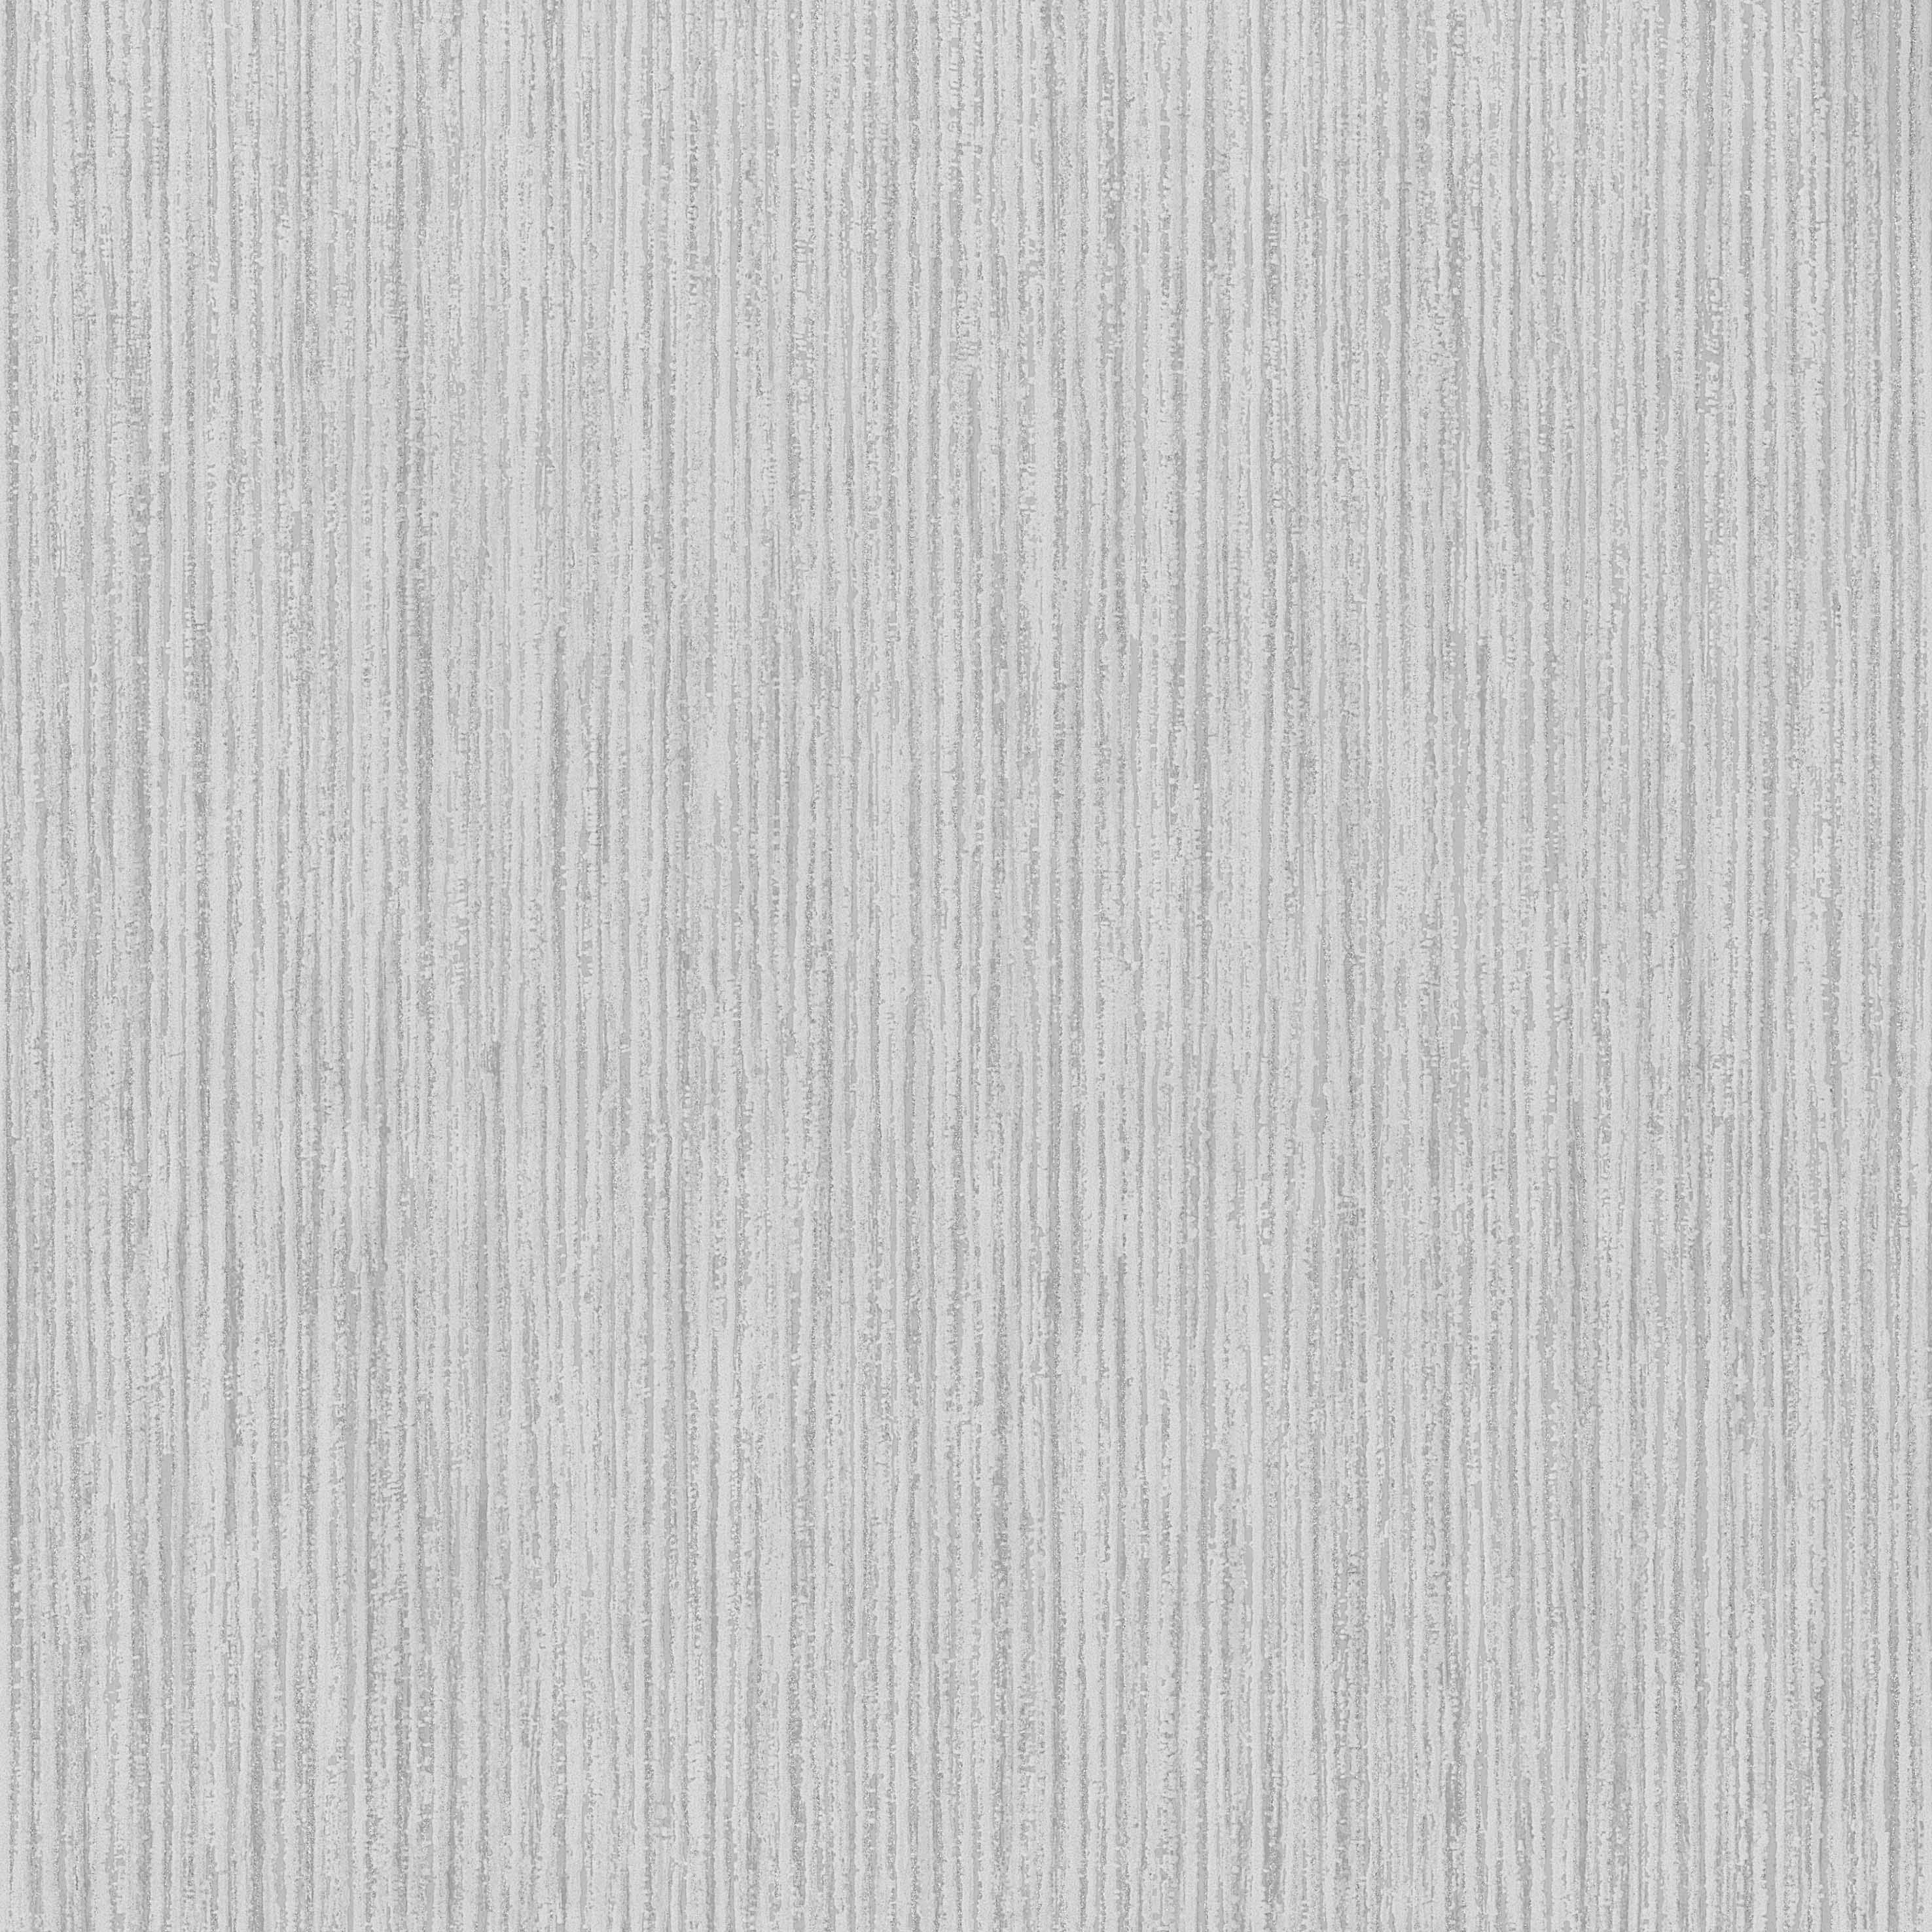 Free Download Grey Textured Wallpaper Silver Birch Texture Grey [2952x2952] For Your Desktop